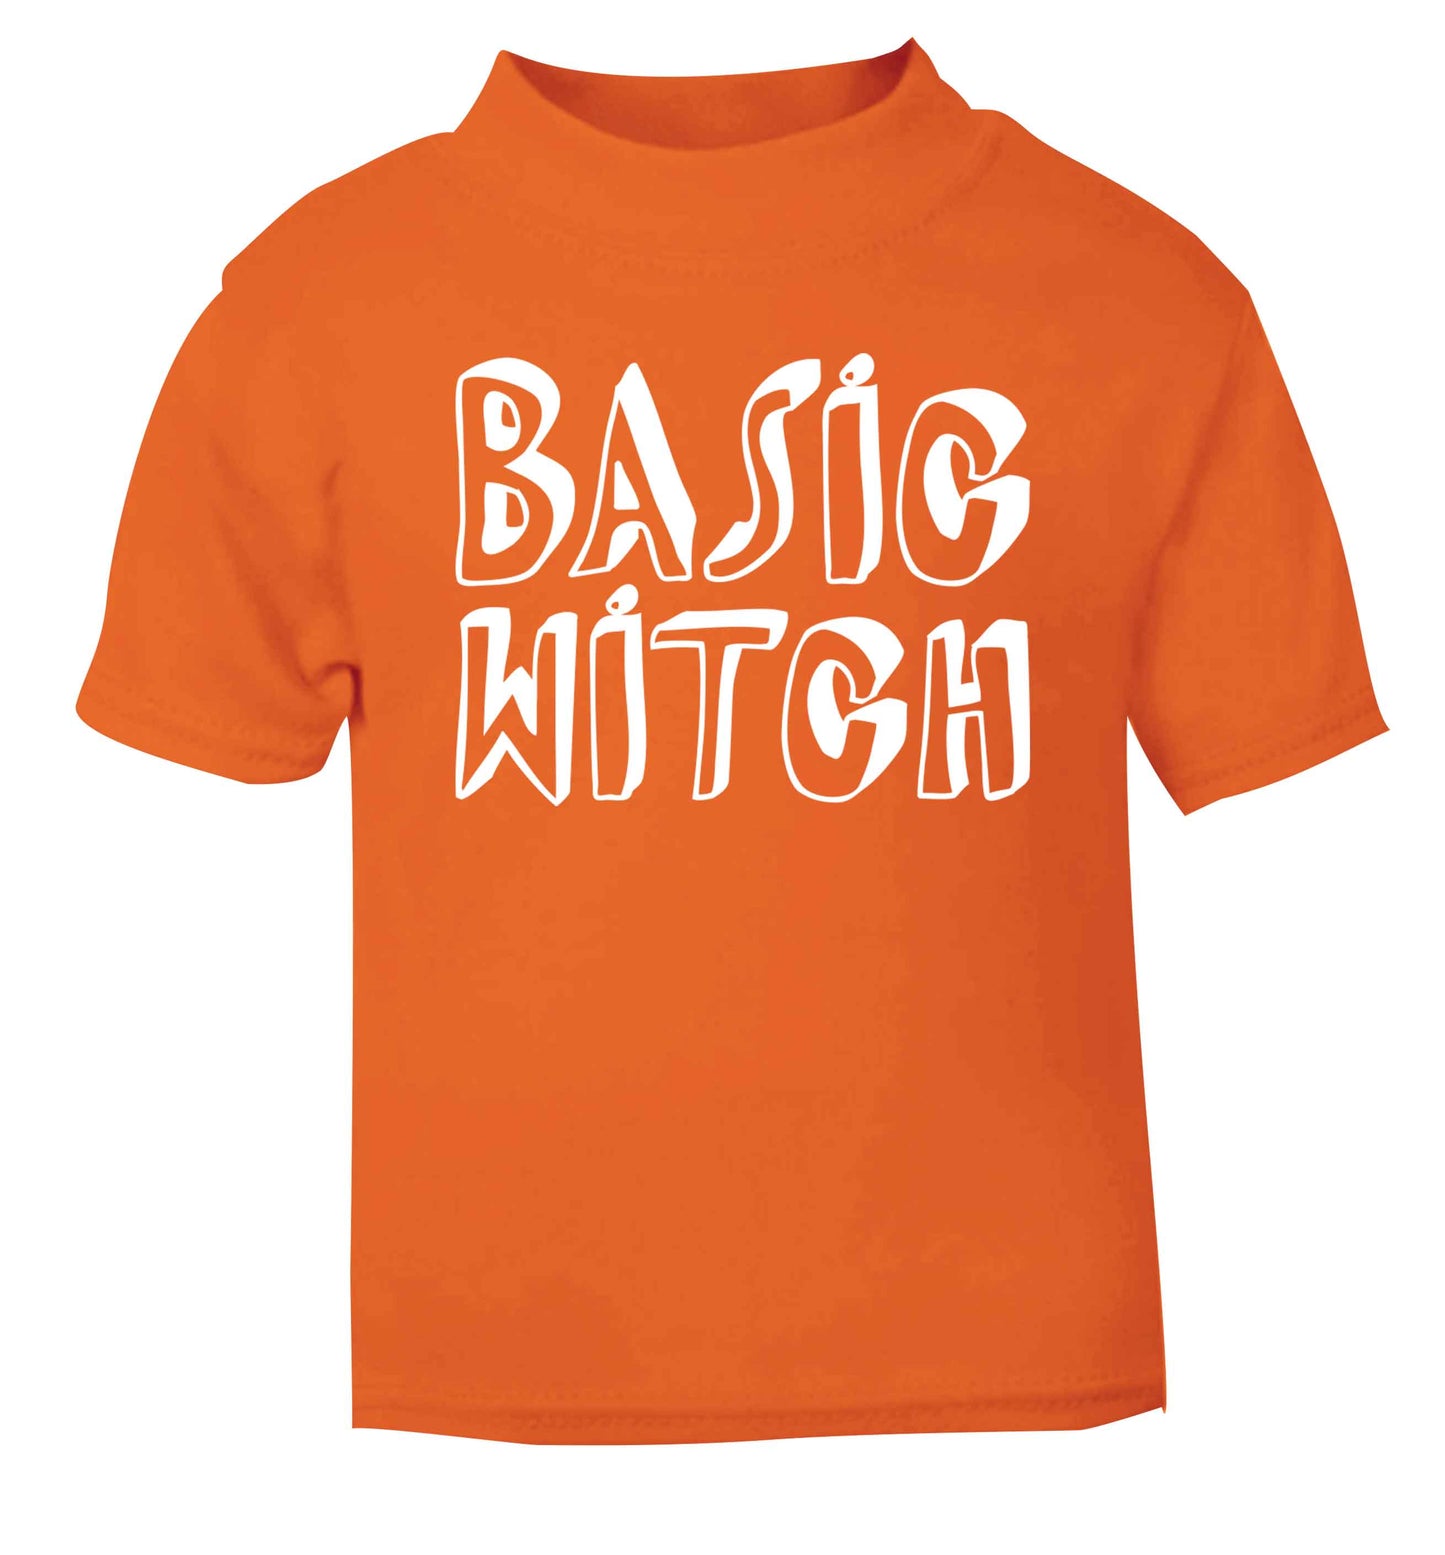 Basic witch orange baby toddler Tshirt 2 Years